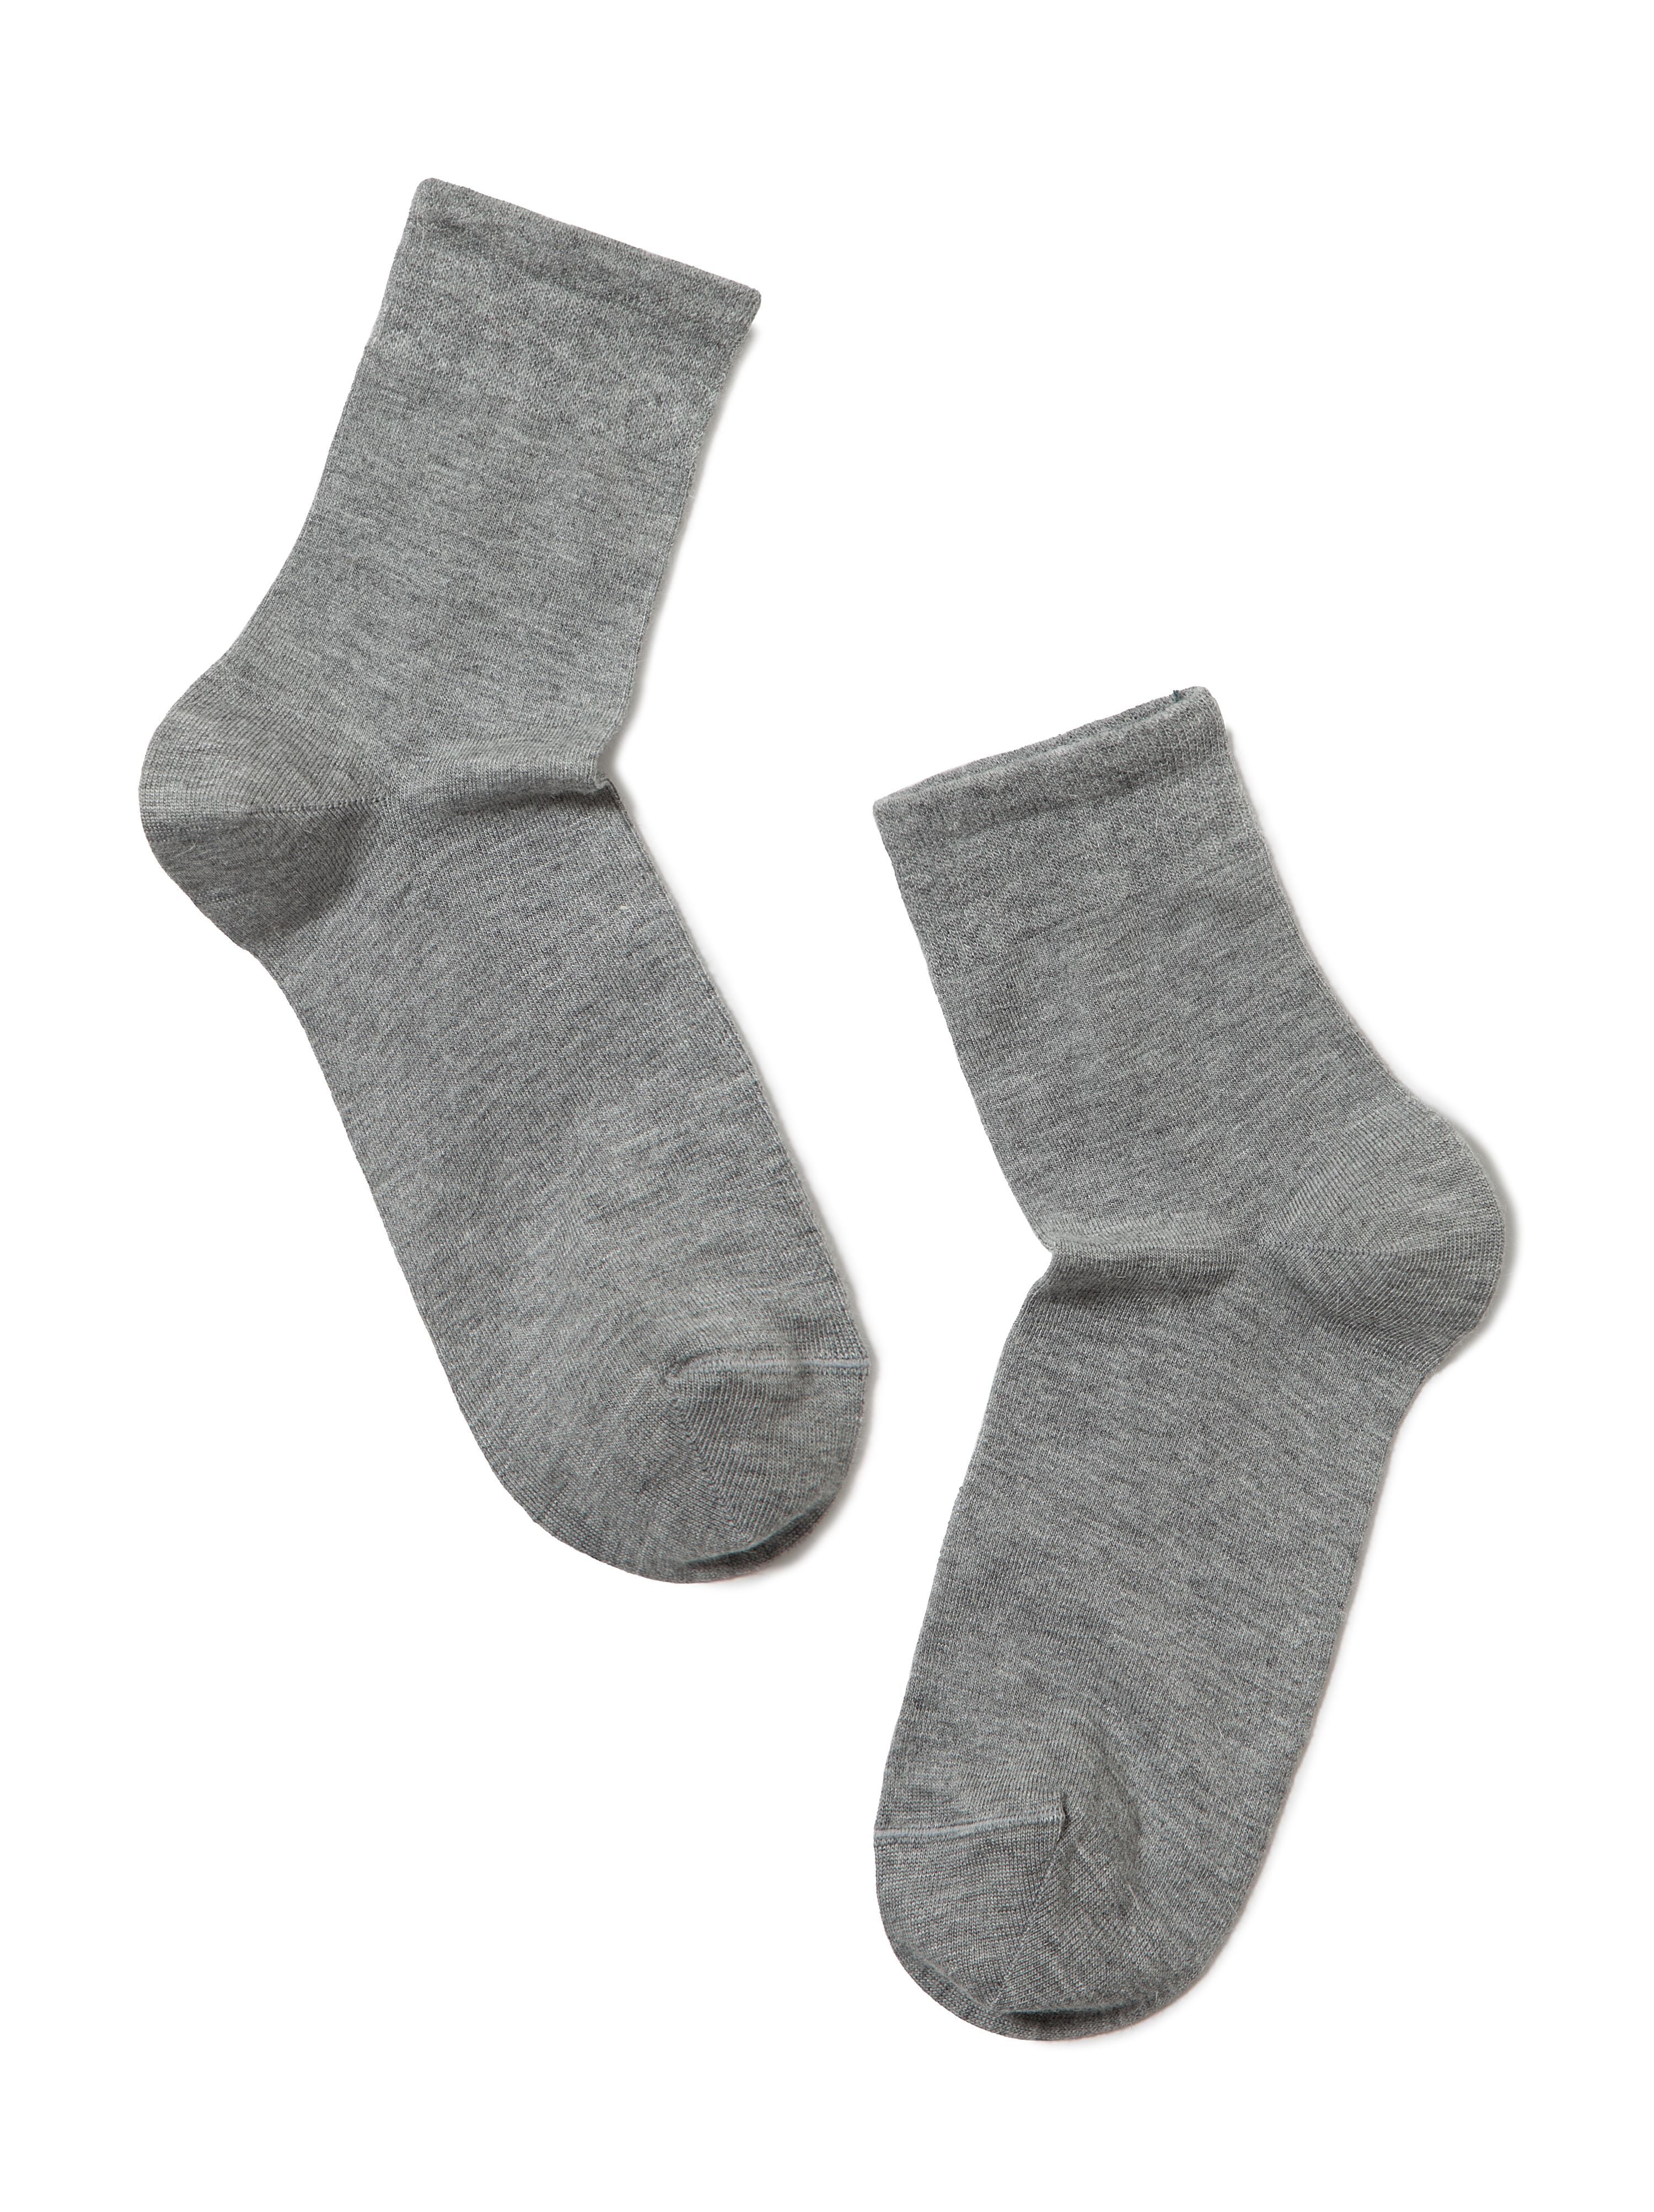 Warm and comfortable skin friendly merino wool women's Socks grey color by Conte Elegant